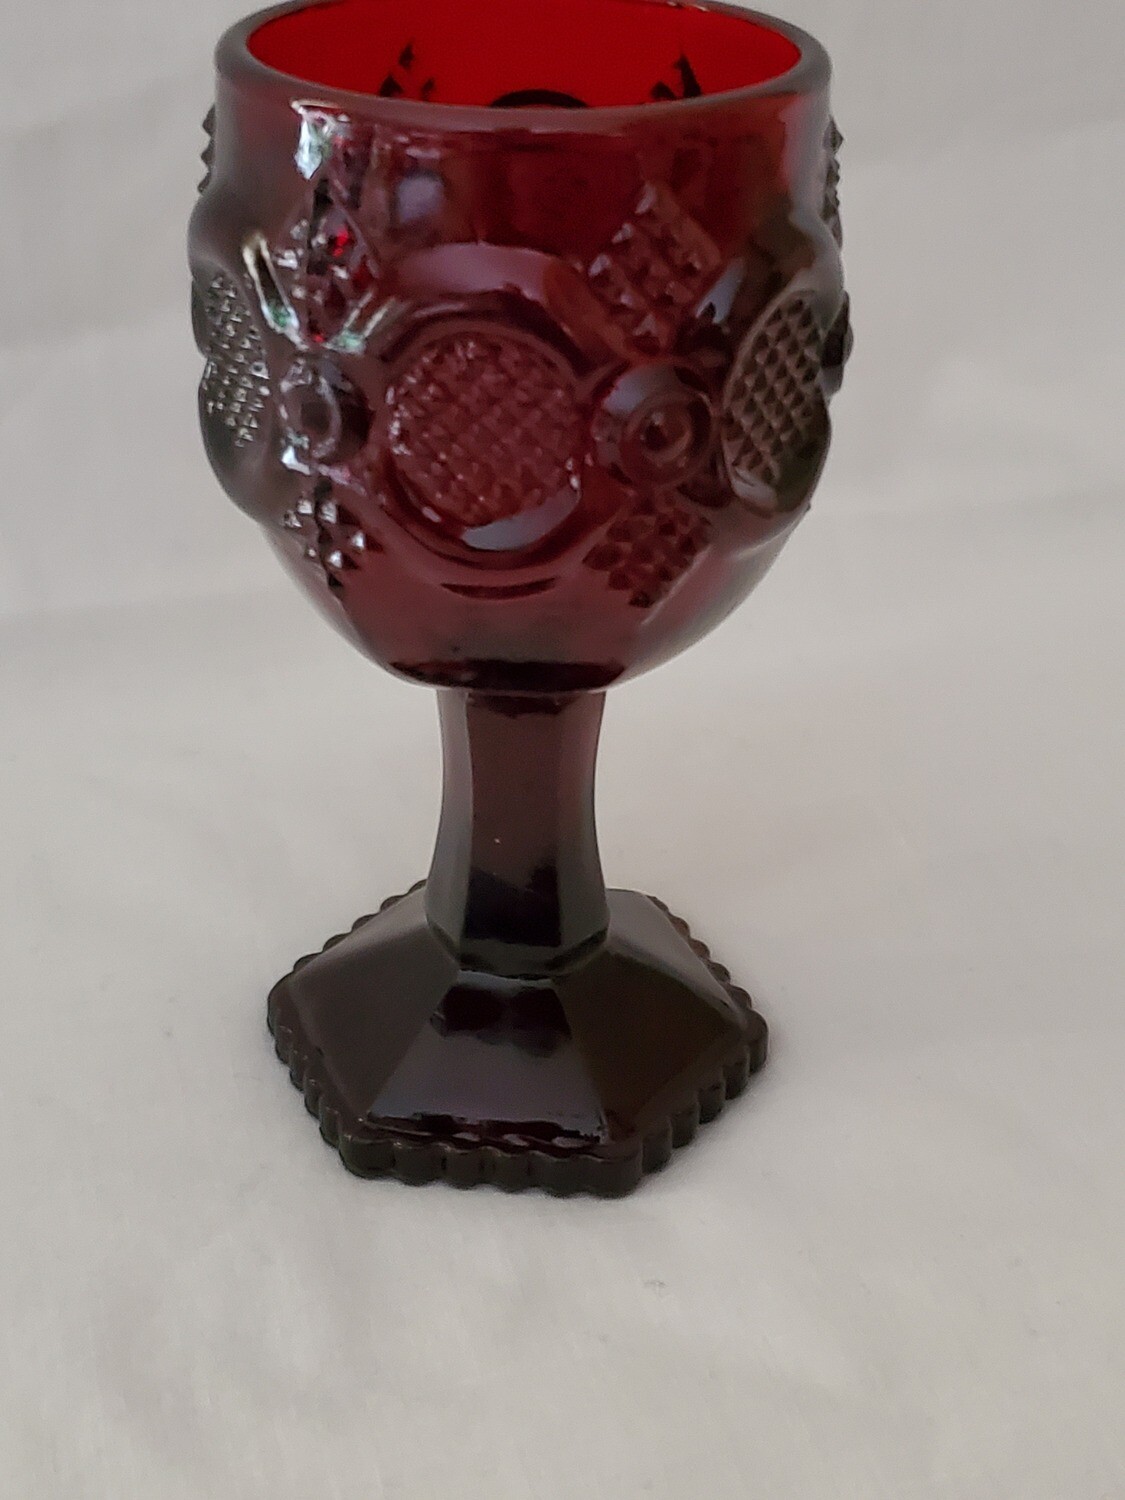 Cape Cod Ruby Wine Glass, by Avon, 4 5/8"